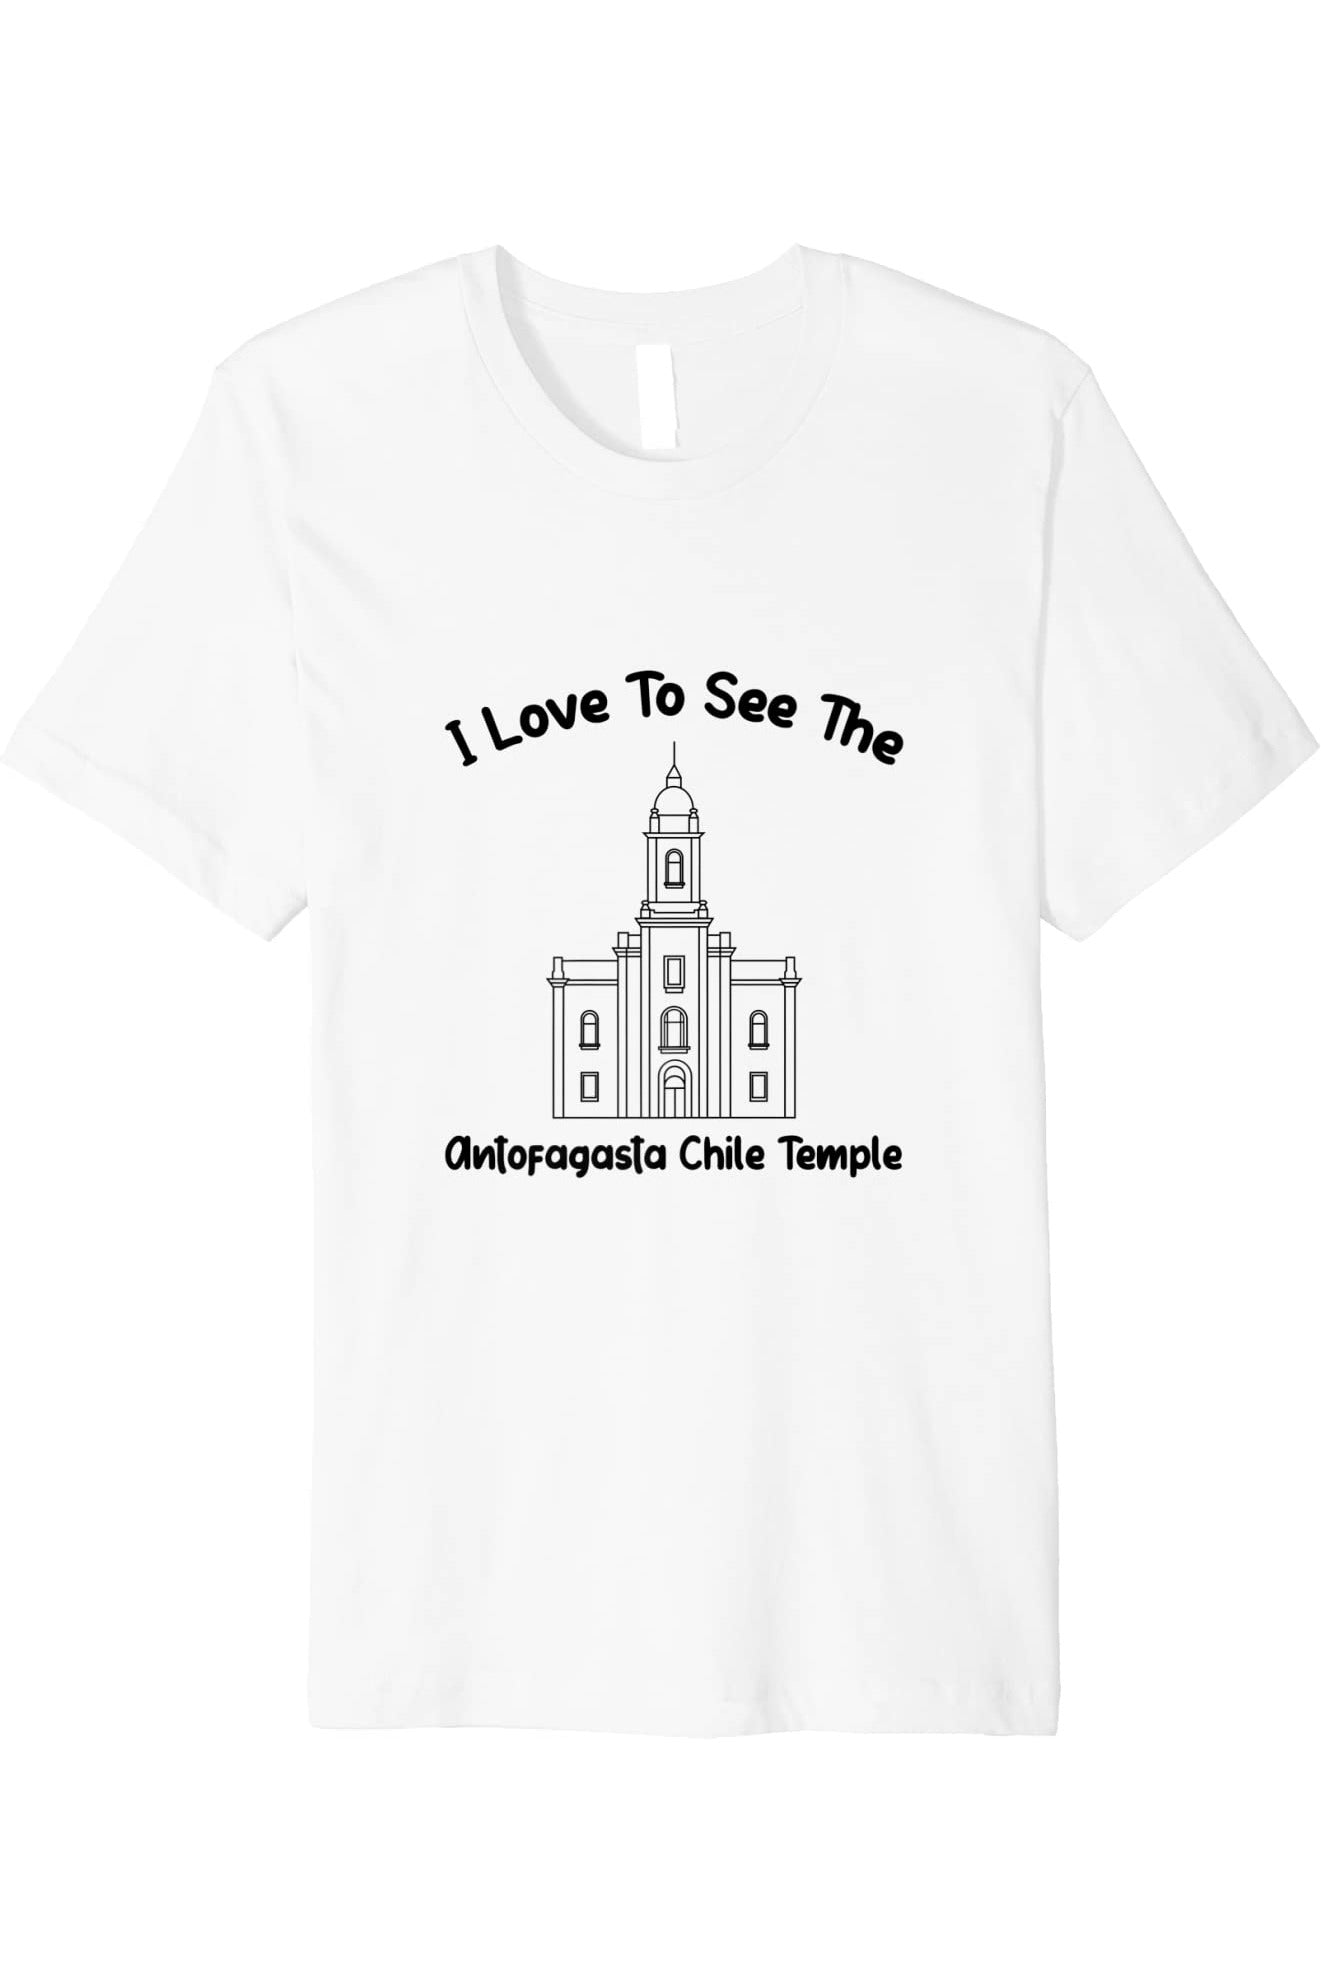 Antofagasta Chile Temple T-Shirt - Premium - Primary Style (English) US